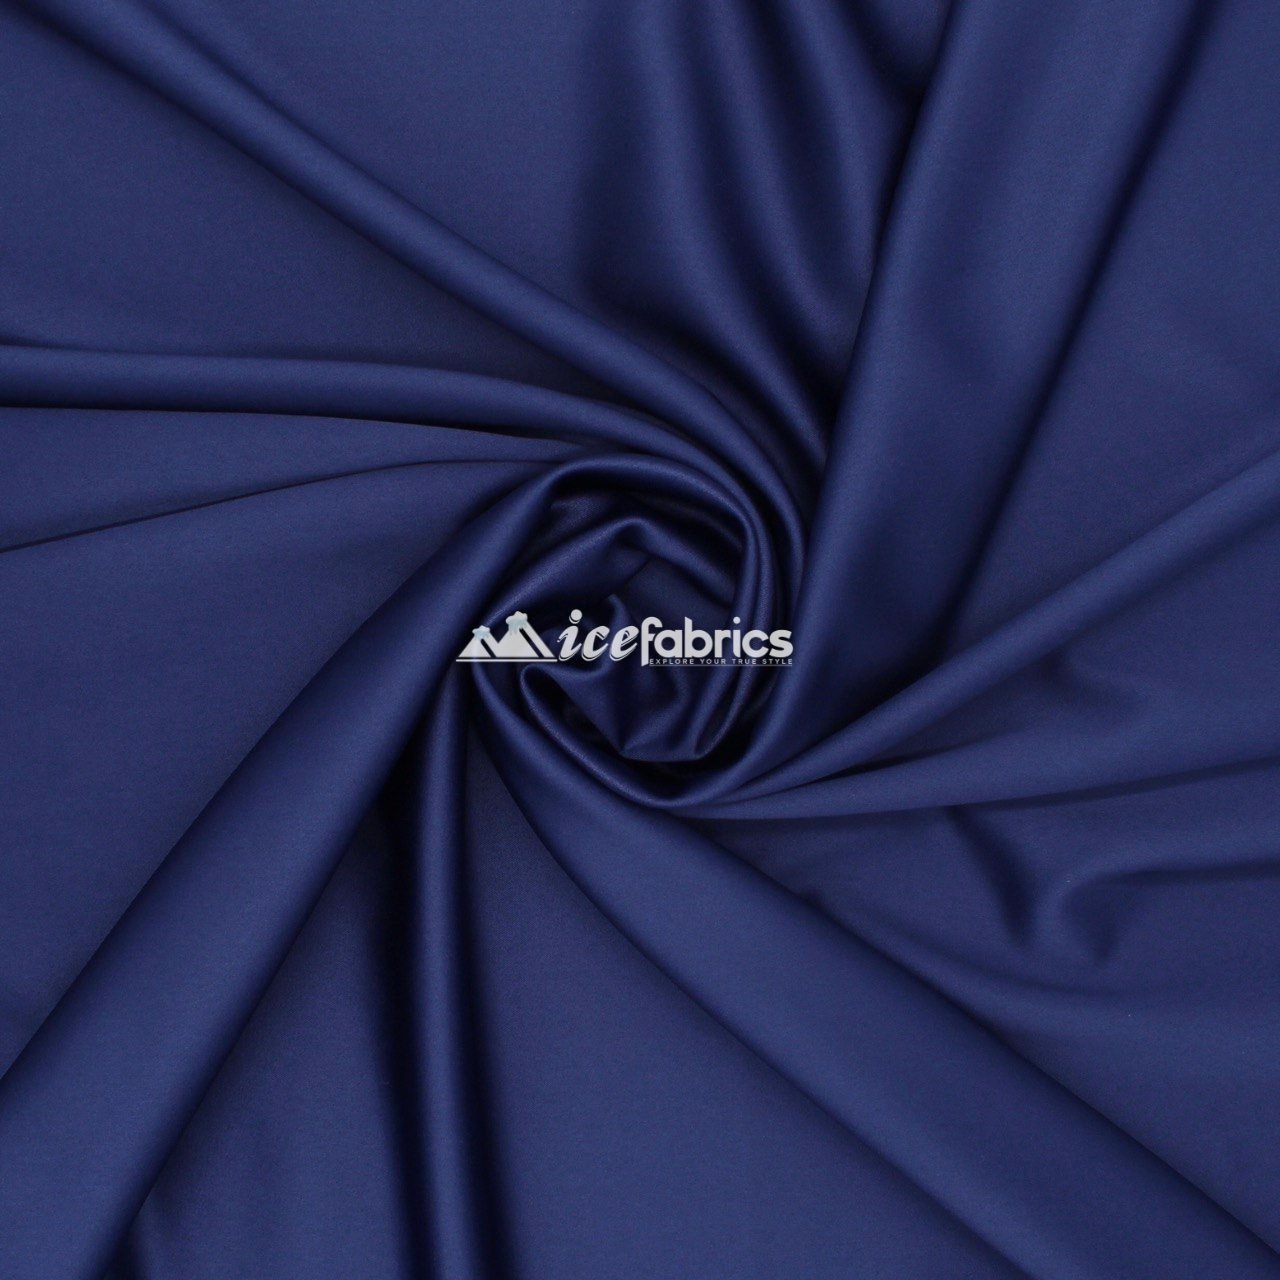 Armani Silk Fabric/ Thick Stretch Satin Fabric/ Spandex Fabric/ Navy BlueSatin FabricICEFABRICICE FABRICSNavy BluePer YardArmani Silk Fabric/ Thick Stretch Satin Fabric/ Spandex Fabric/ Navy Blue ICEFABRIC